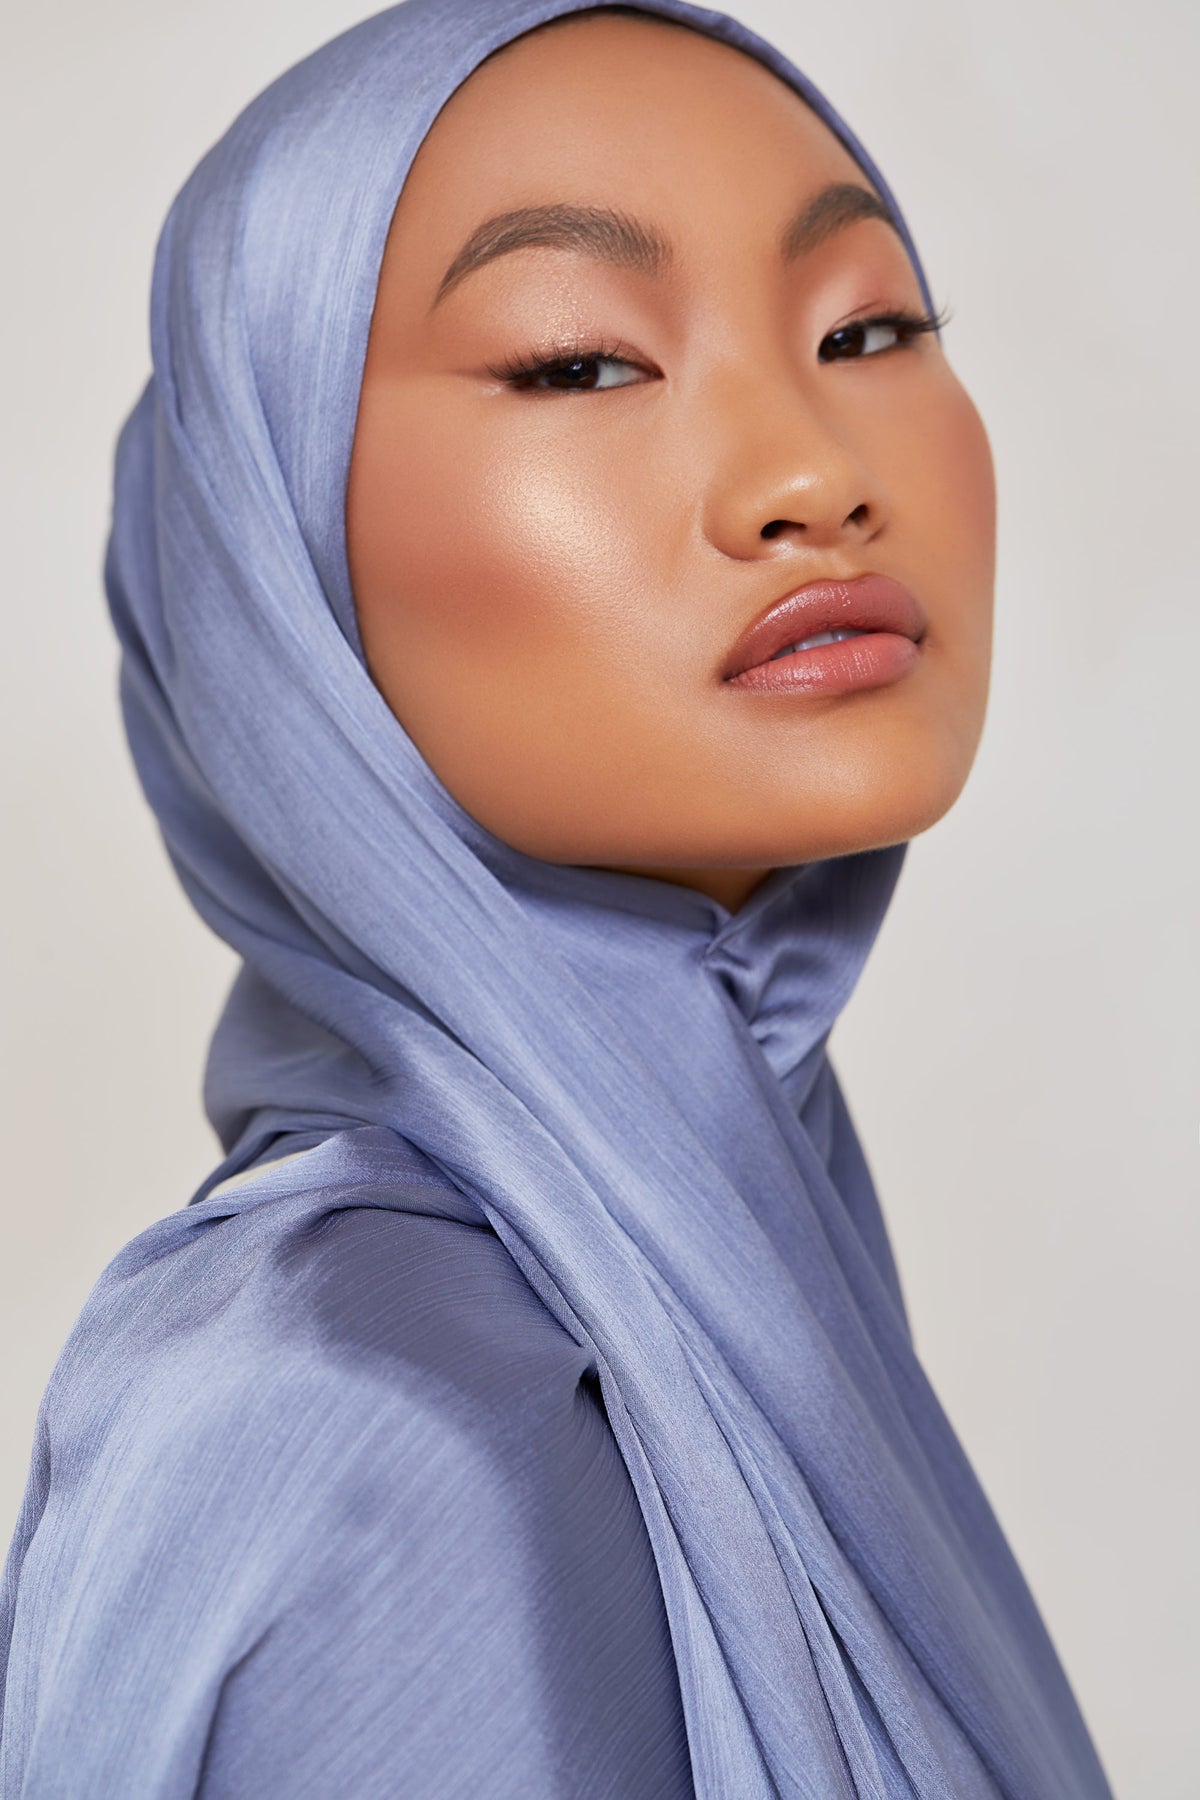 TEXTURE Satin Crepe Hijab - Denim Crepe Veiled Collection 